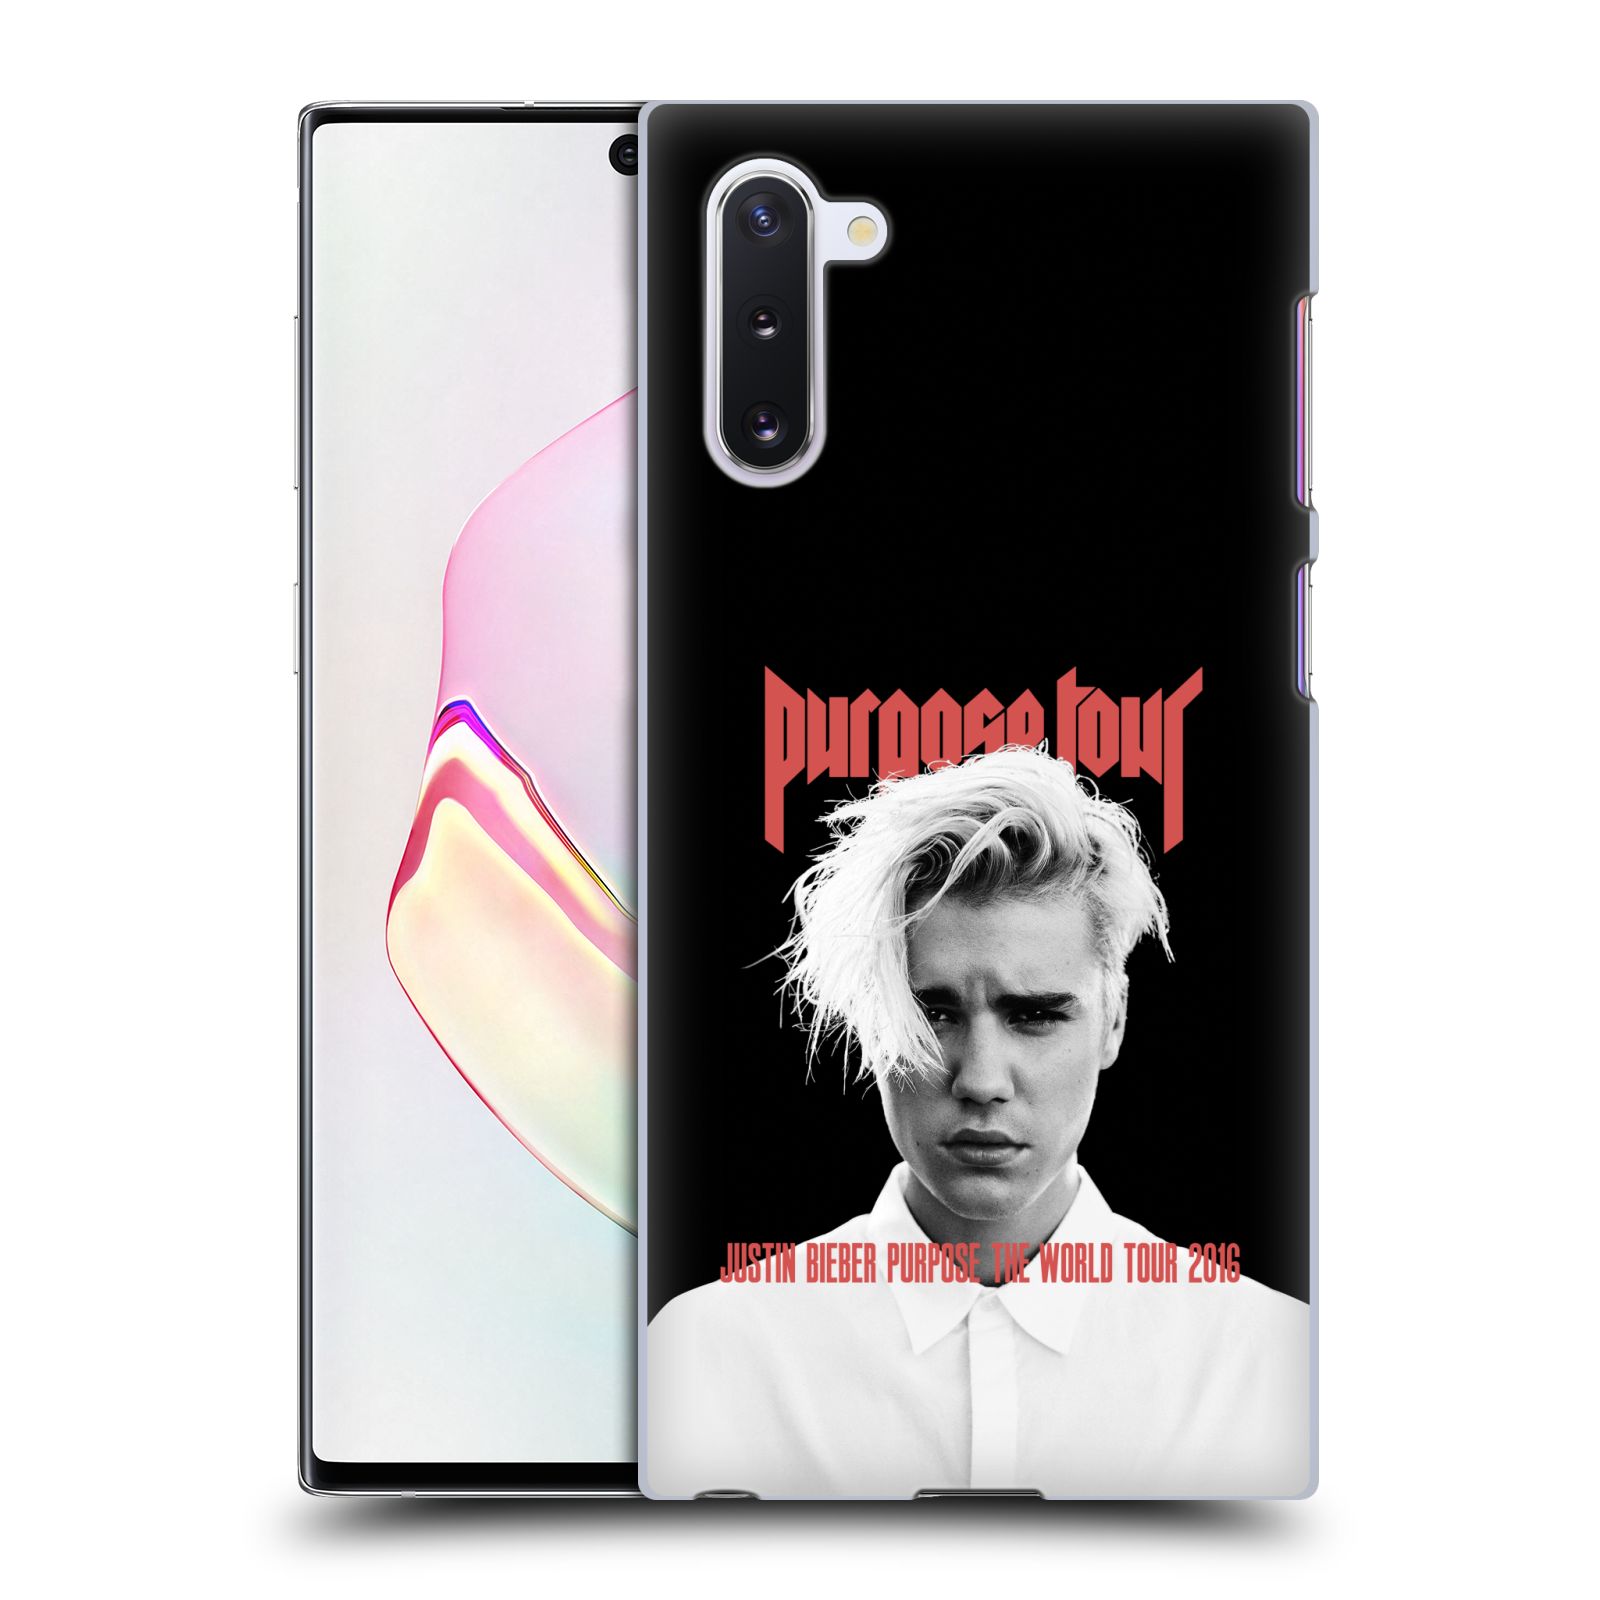 Pouzdro na mobil Samsung Galaxy Note 10 - HEAD CASE - Justin Bieber foto Purpose tour černé pozadí